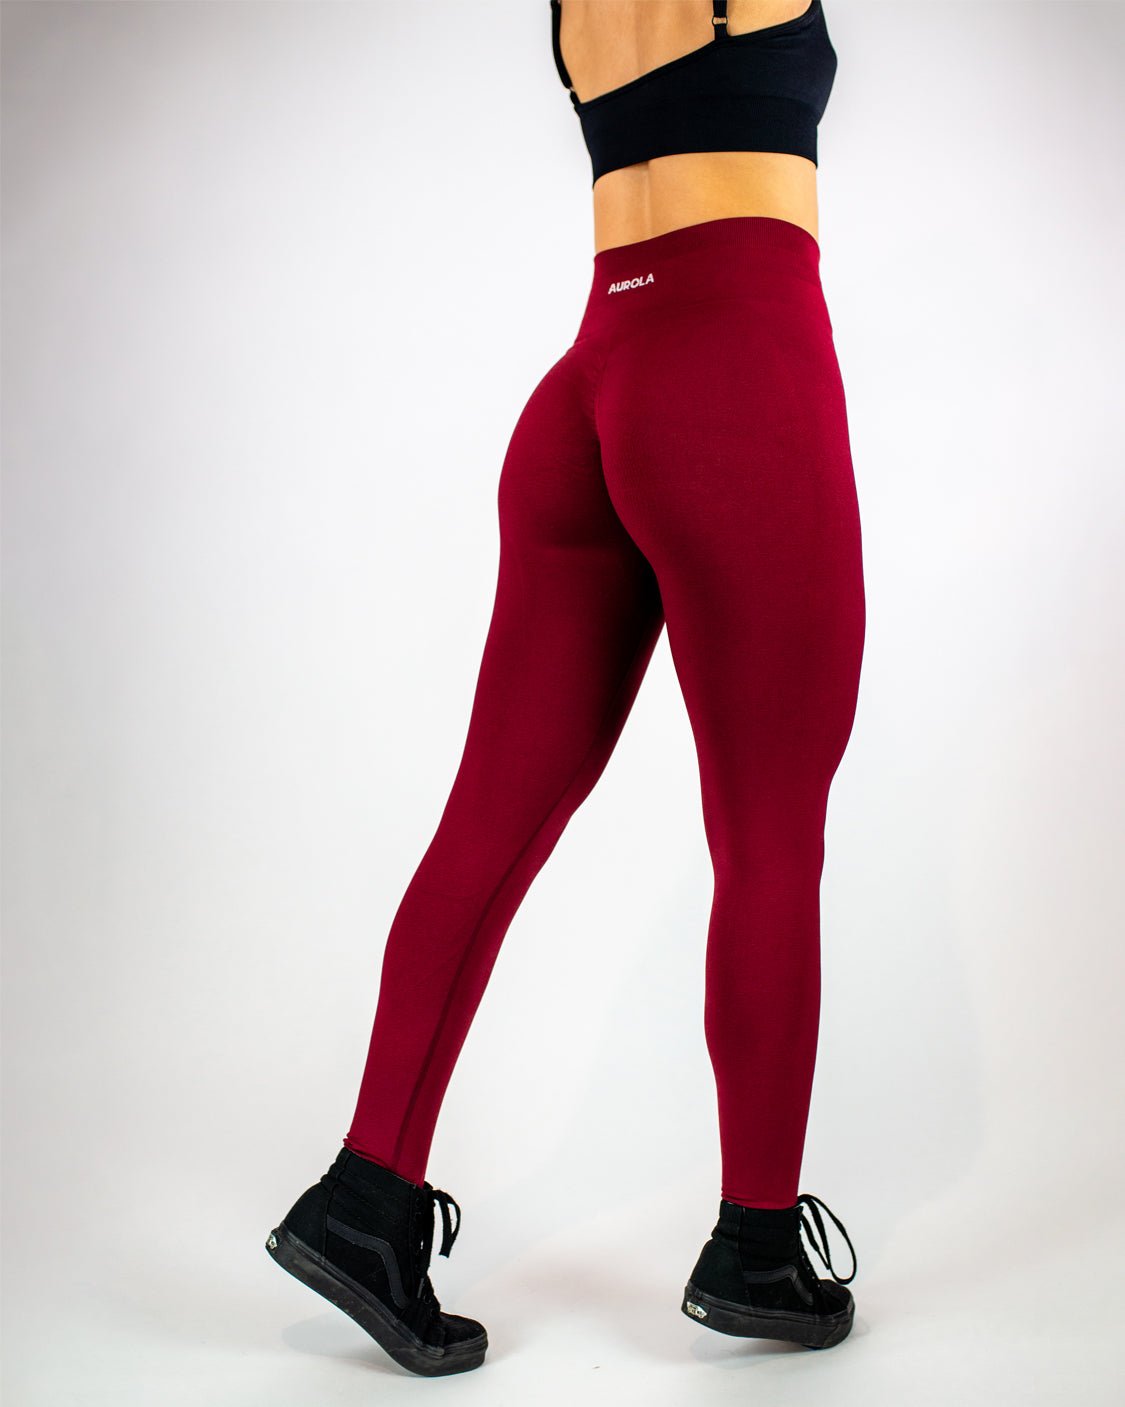 Aurola Store, Pants & Jumpsuits, Aurola Workout Leggings For Women  Seamless Scrunch Tights Tummy Control